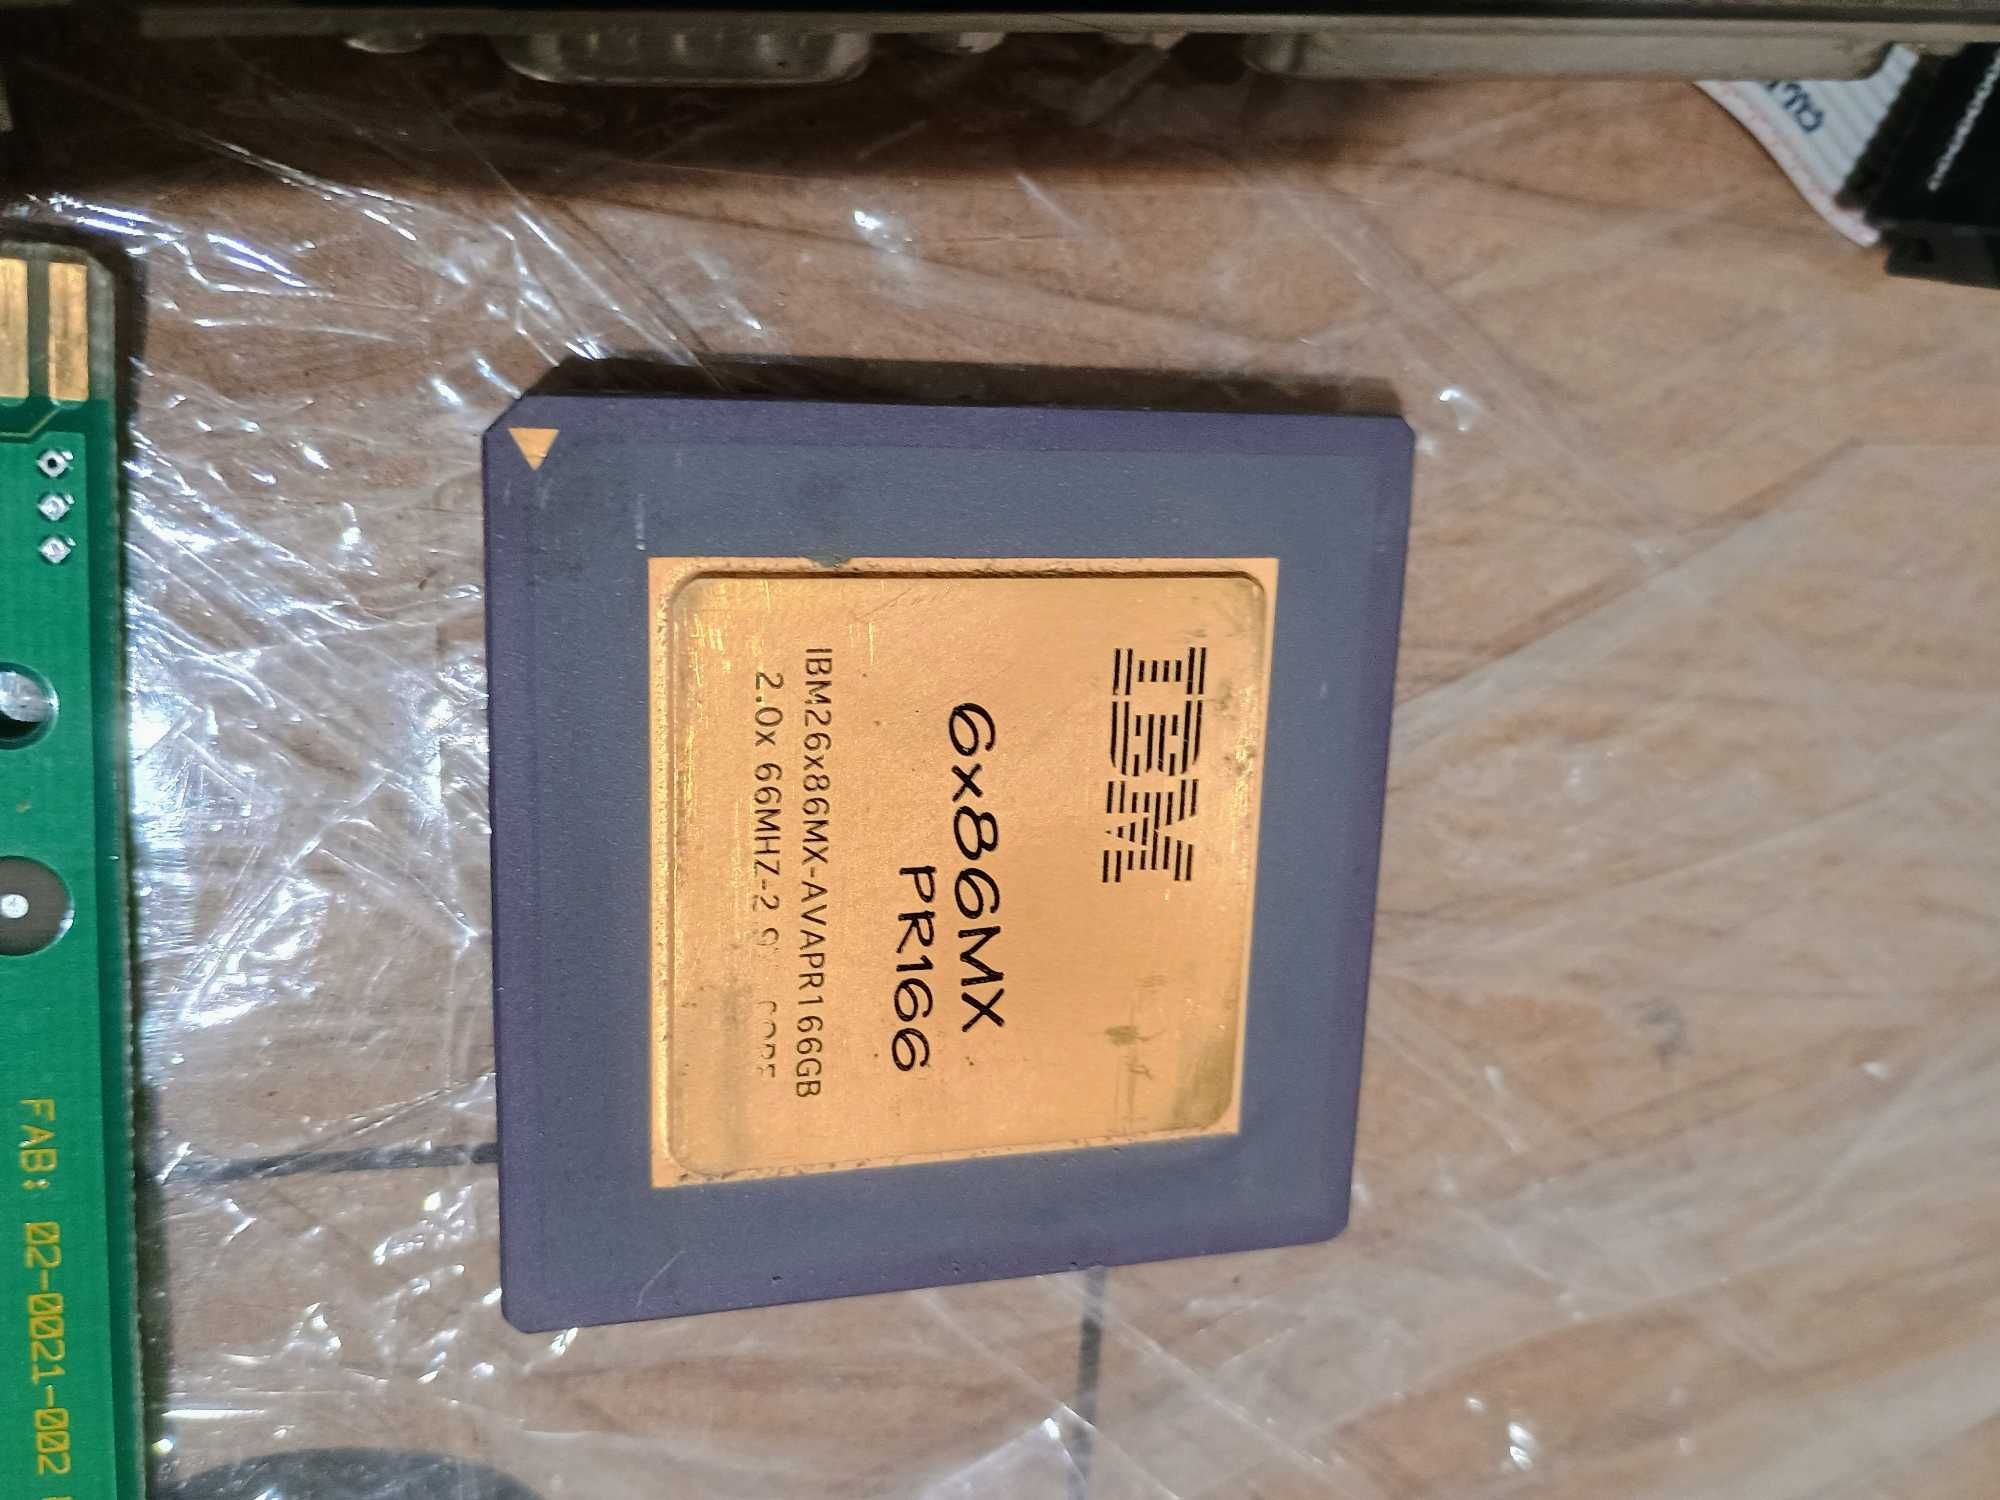 Płyta główna + CPU IBM 6x86 PR166 + karta TRIDENT ISA + karta 3COM.